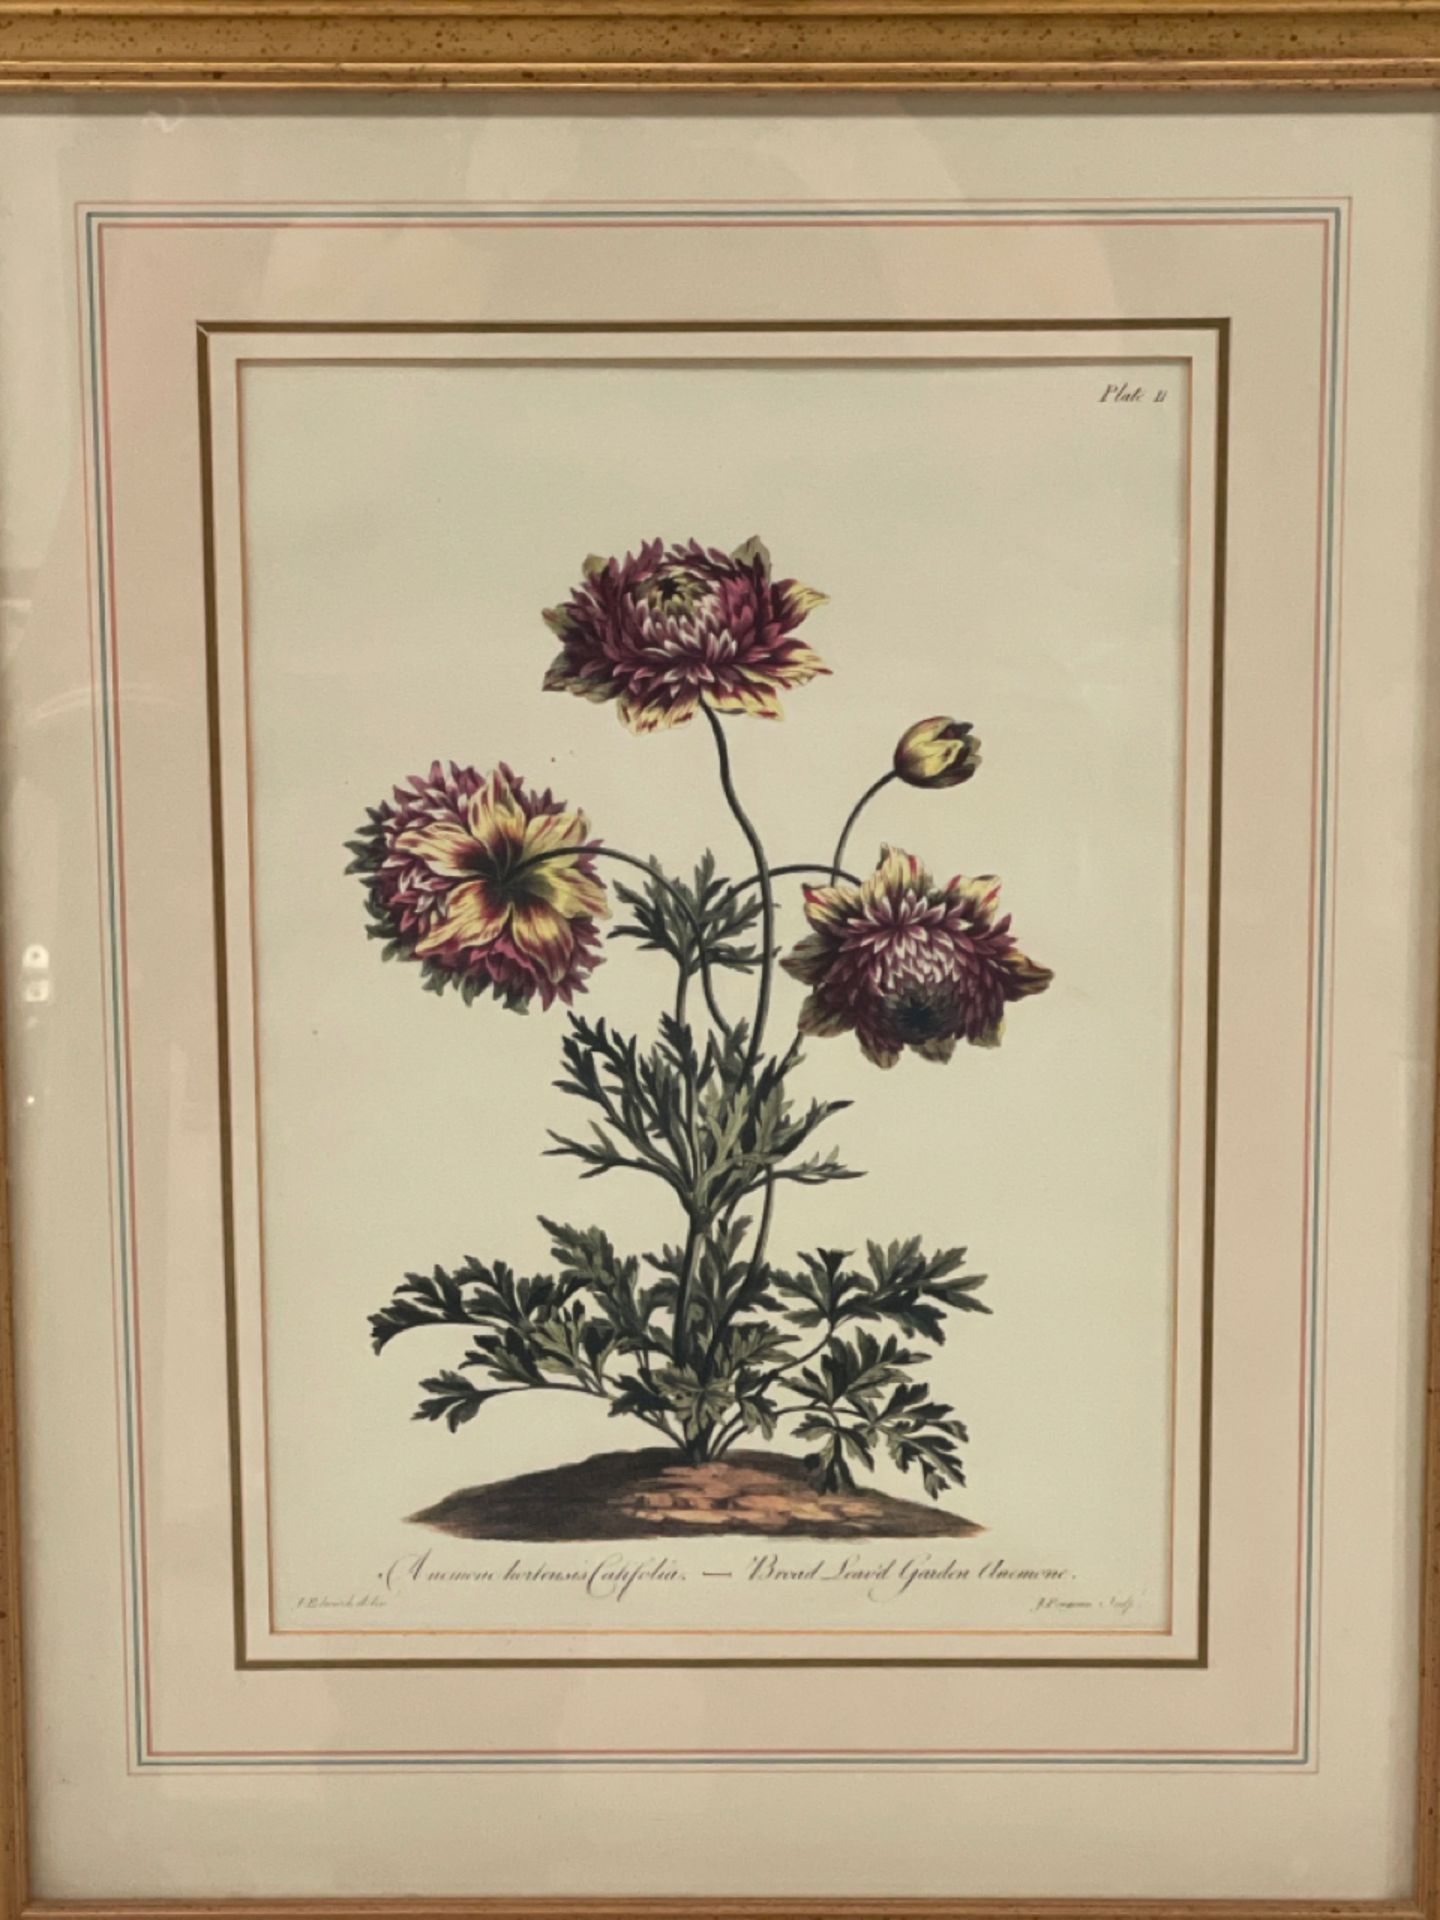 Flower Artwork Print From Claridge's Hotel - Image 2 of 2